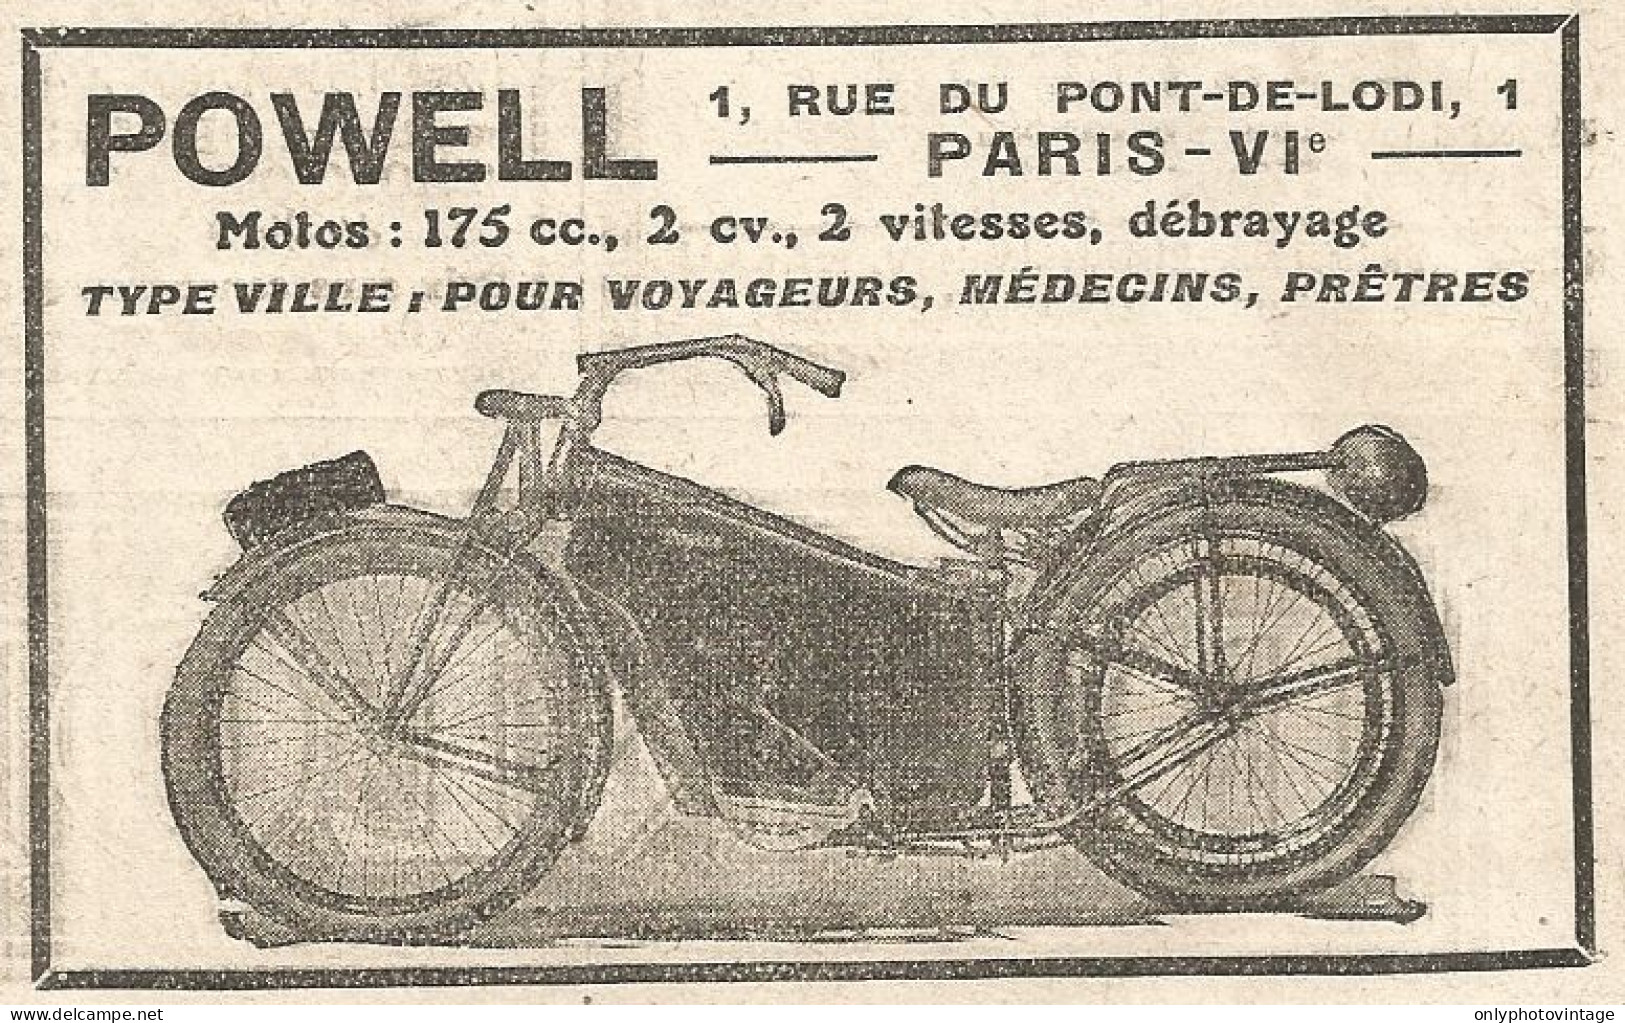 Motocicletta 175 Cc. POWELL - Pubblicitï¿½ Del 1925 - Old Advertising - Advertising